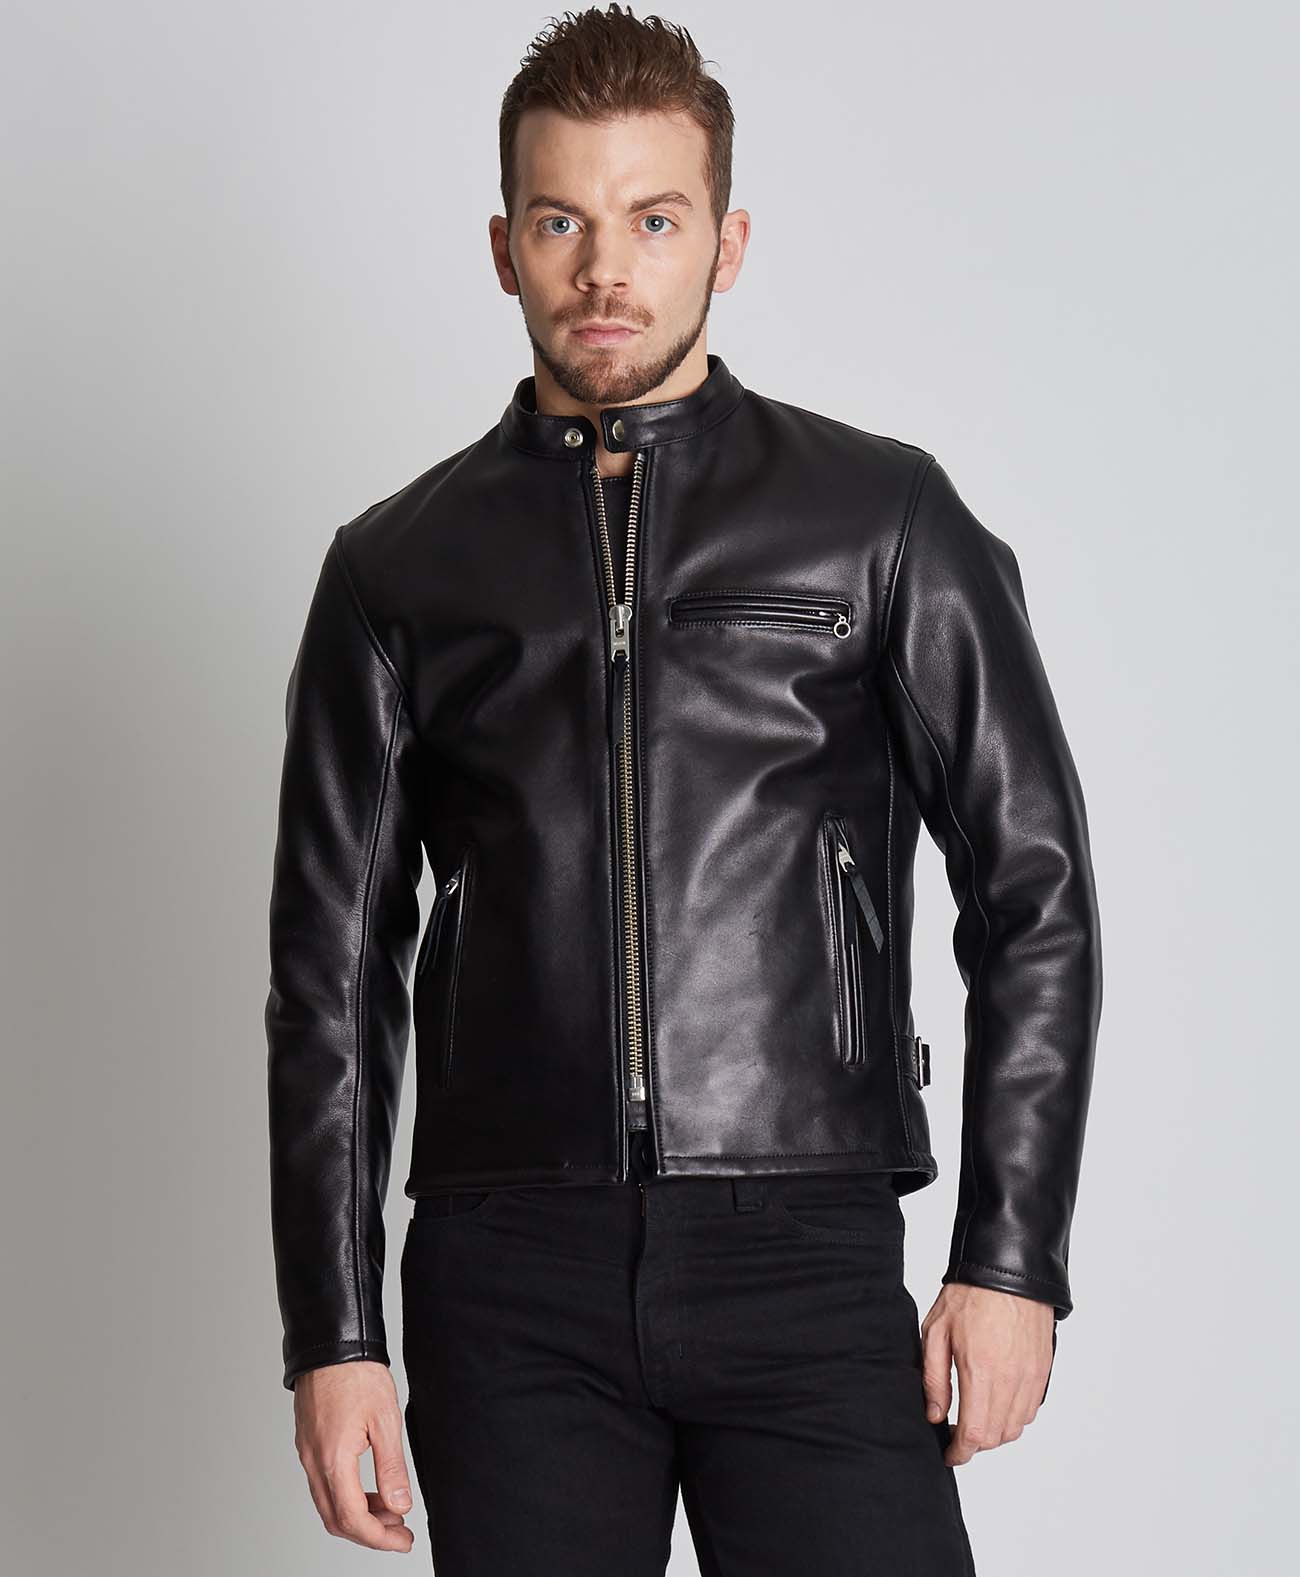 Leather jacket single leather jacket | Kadoya official online shop ...